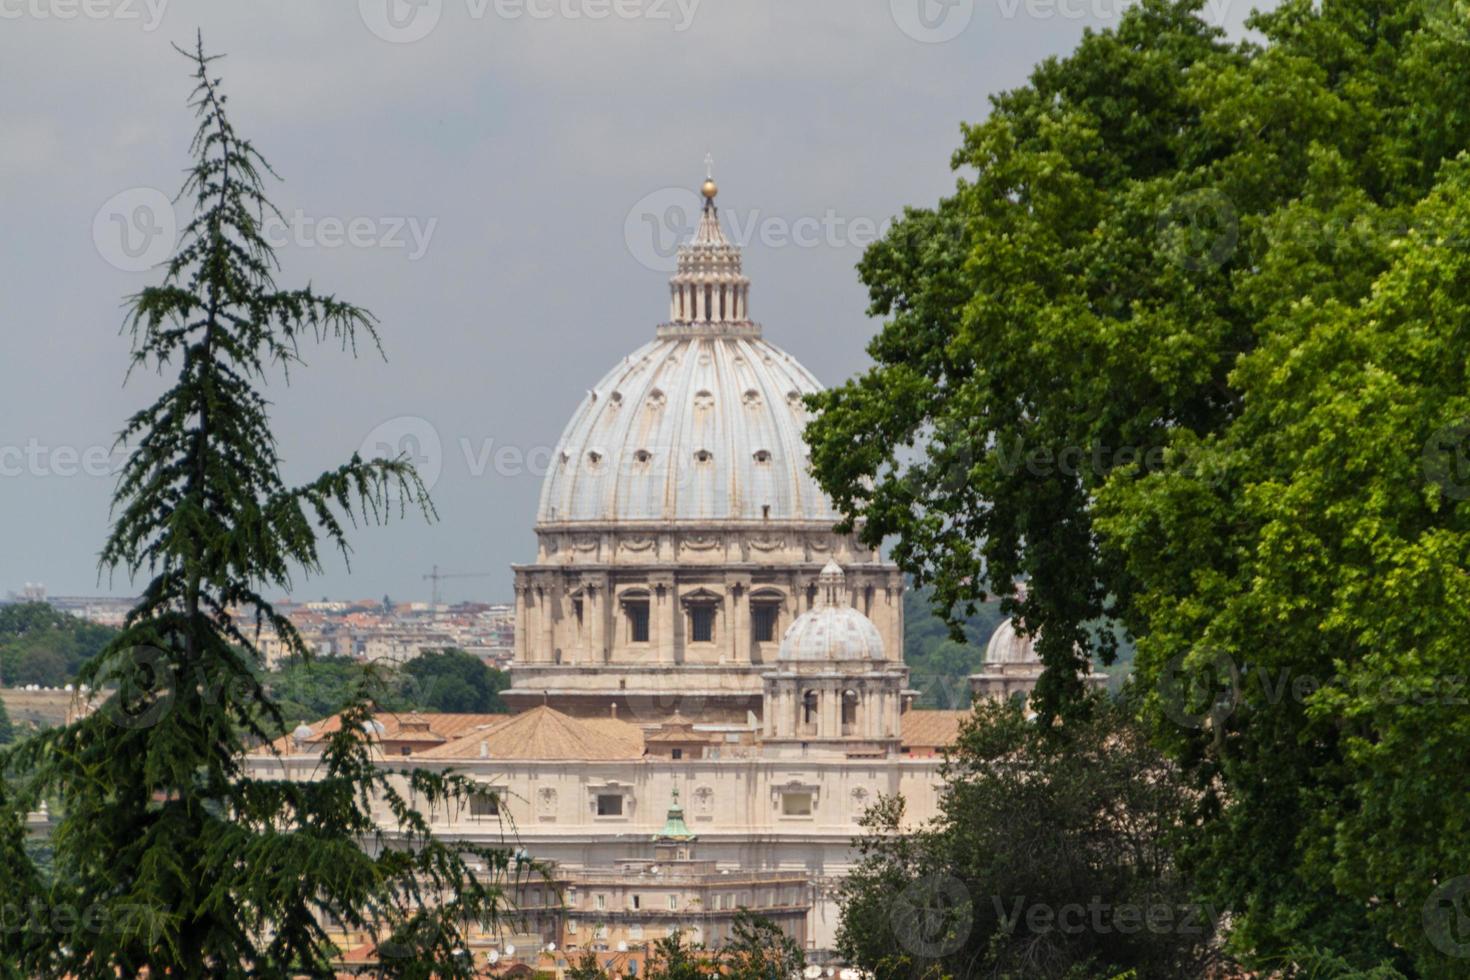 basilica di san pietro, vatikanstadt, rom, italien foto